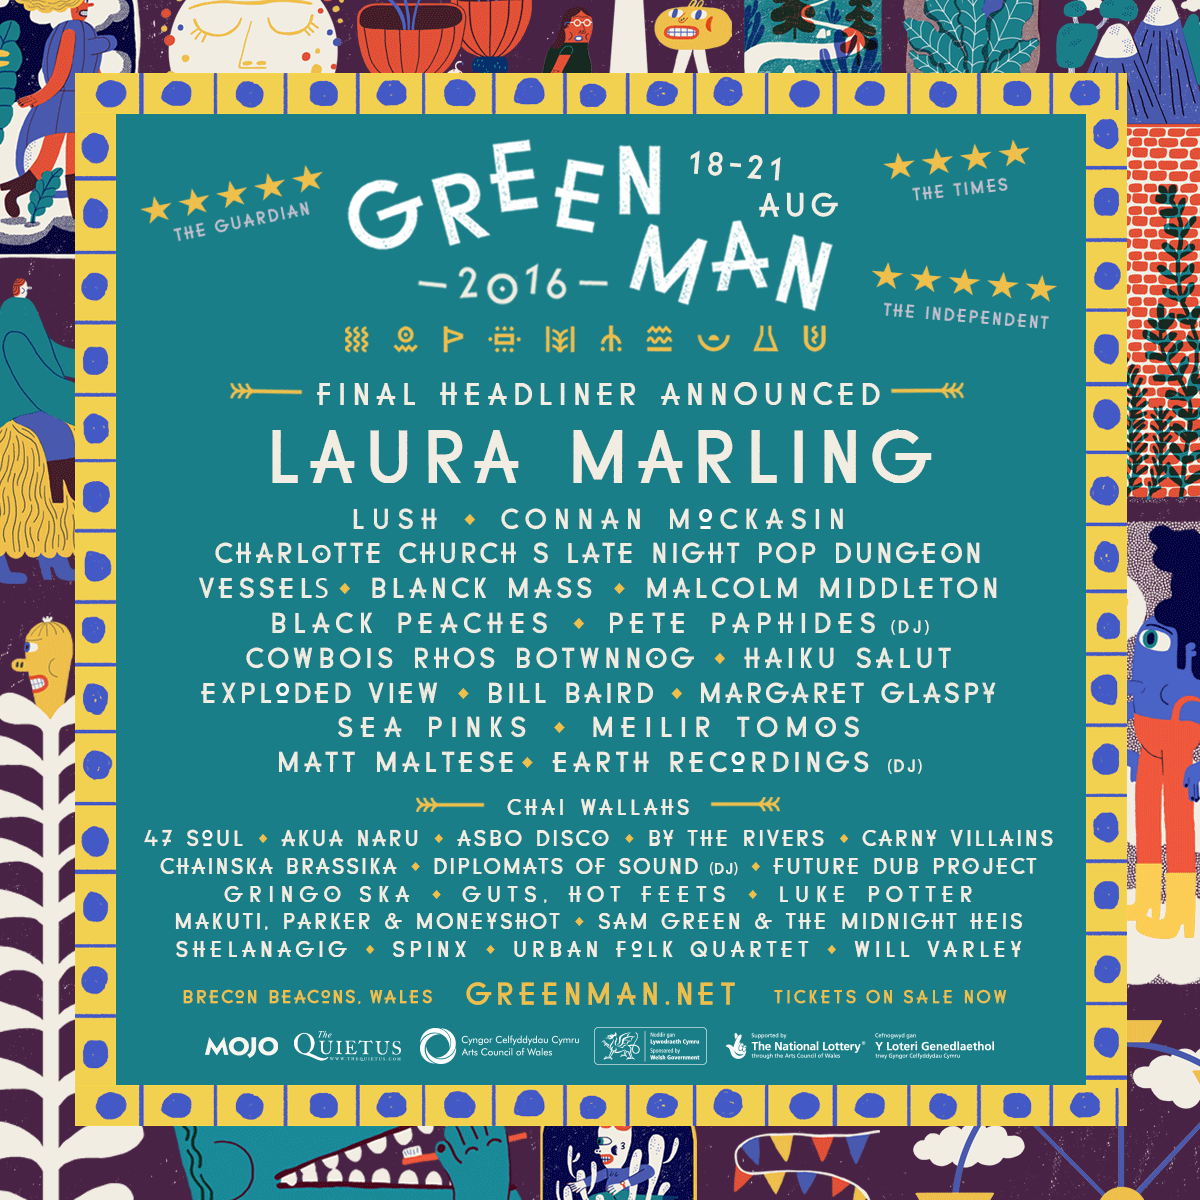 NEWS:  Laura Marling, Lush and Connan Mockasin announced for Green Man 2016